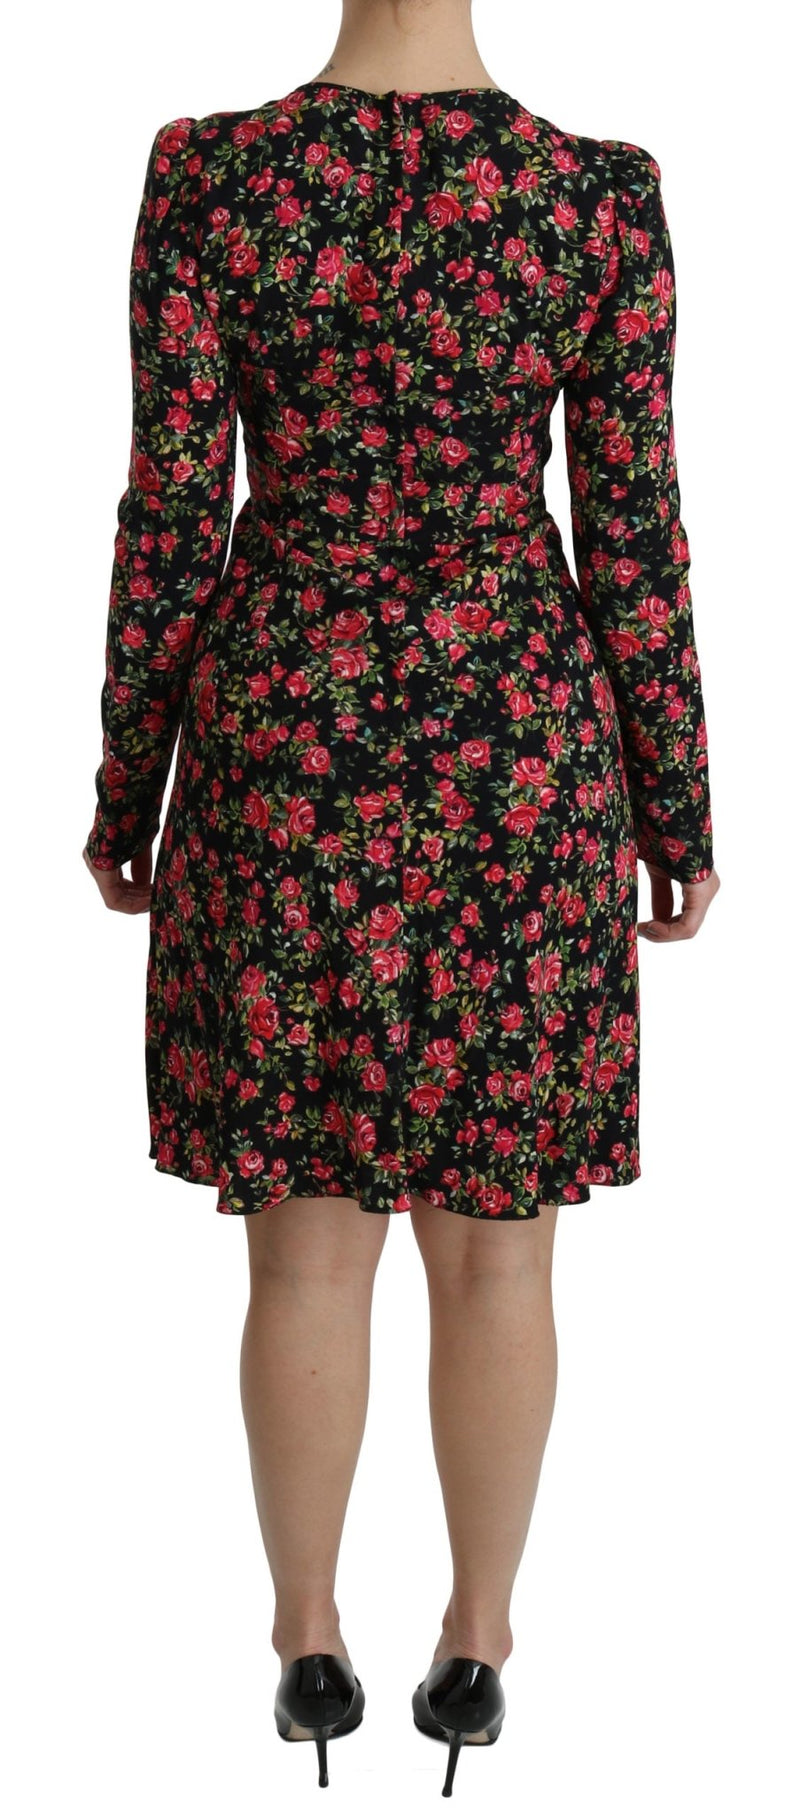 Black Floral Longsleeve Knee Length Dress - Avaz Shop